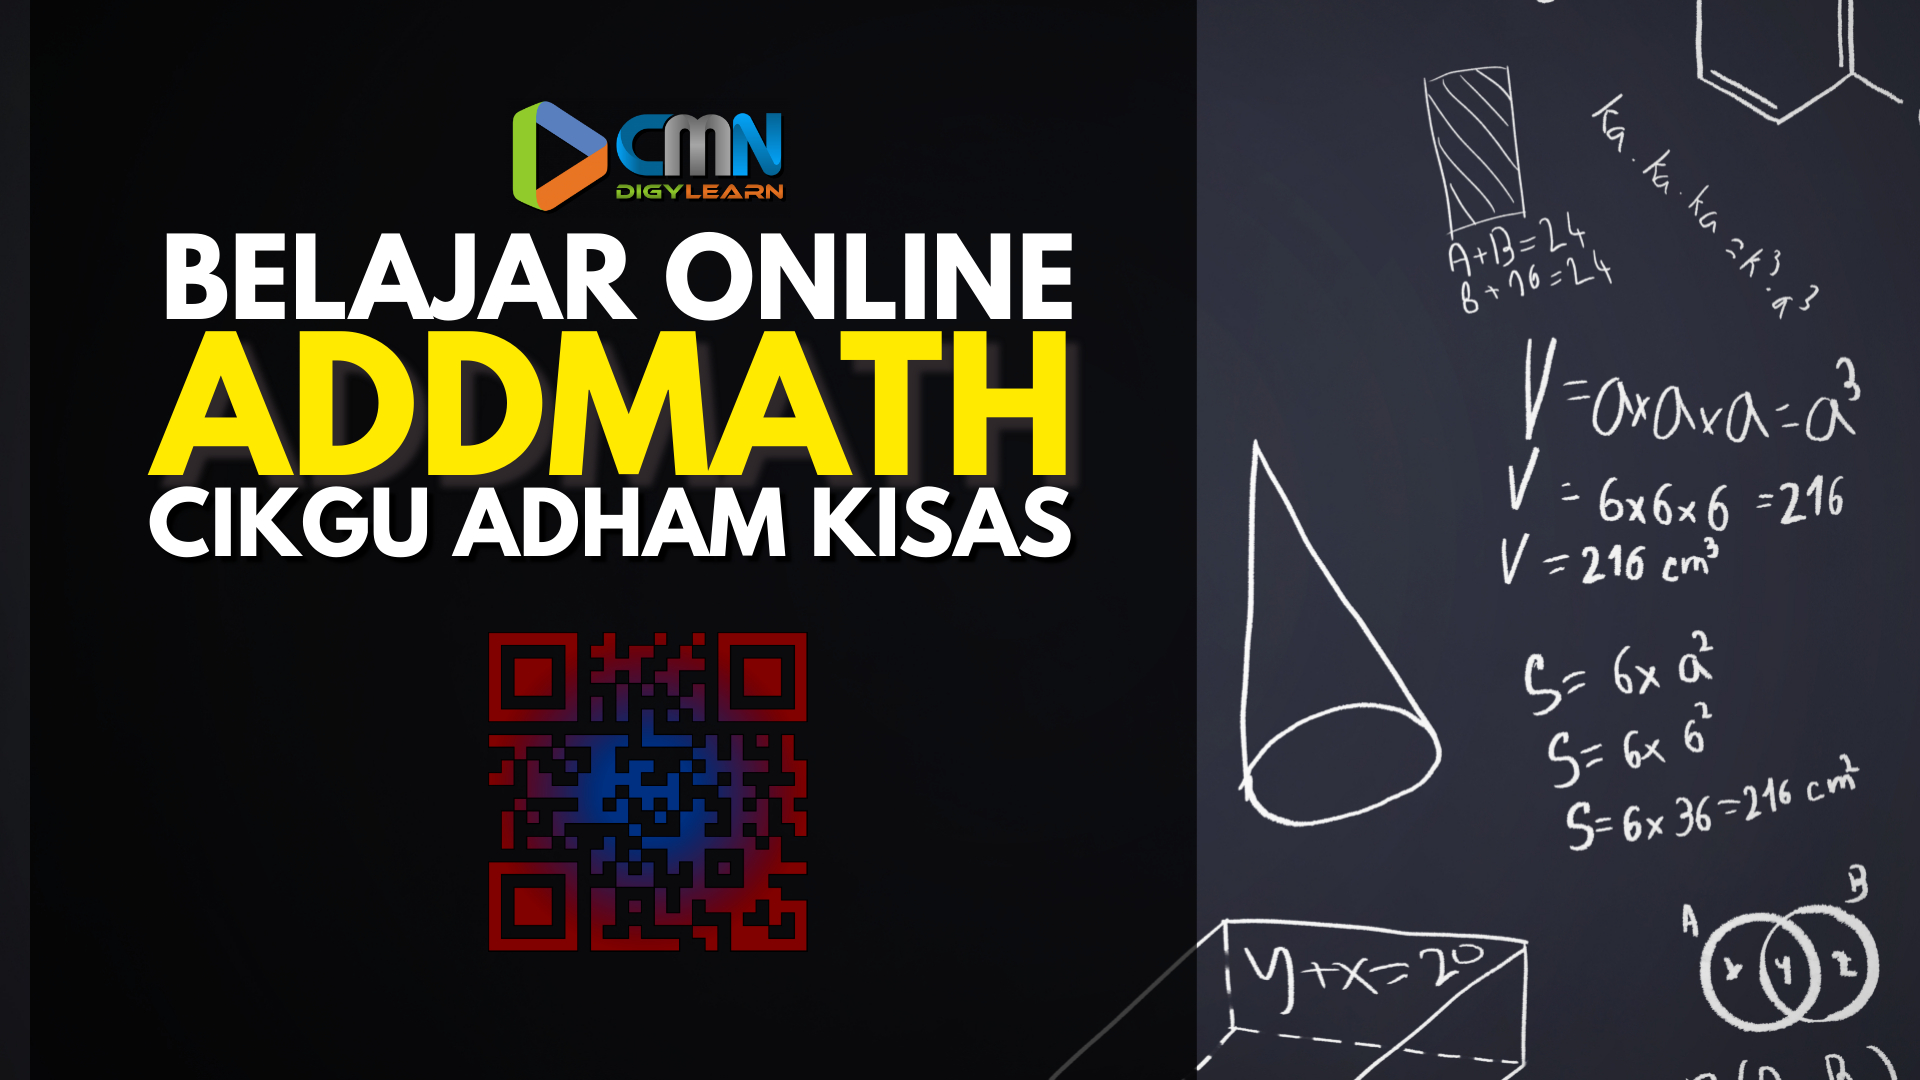 Belajar Online Addmath bersama Cikgu Adham KISAS